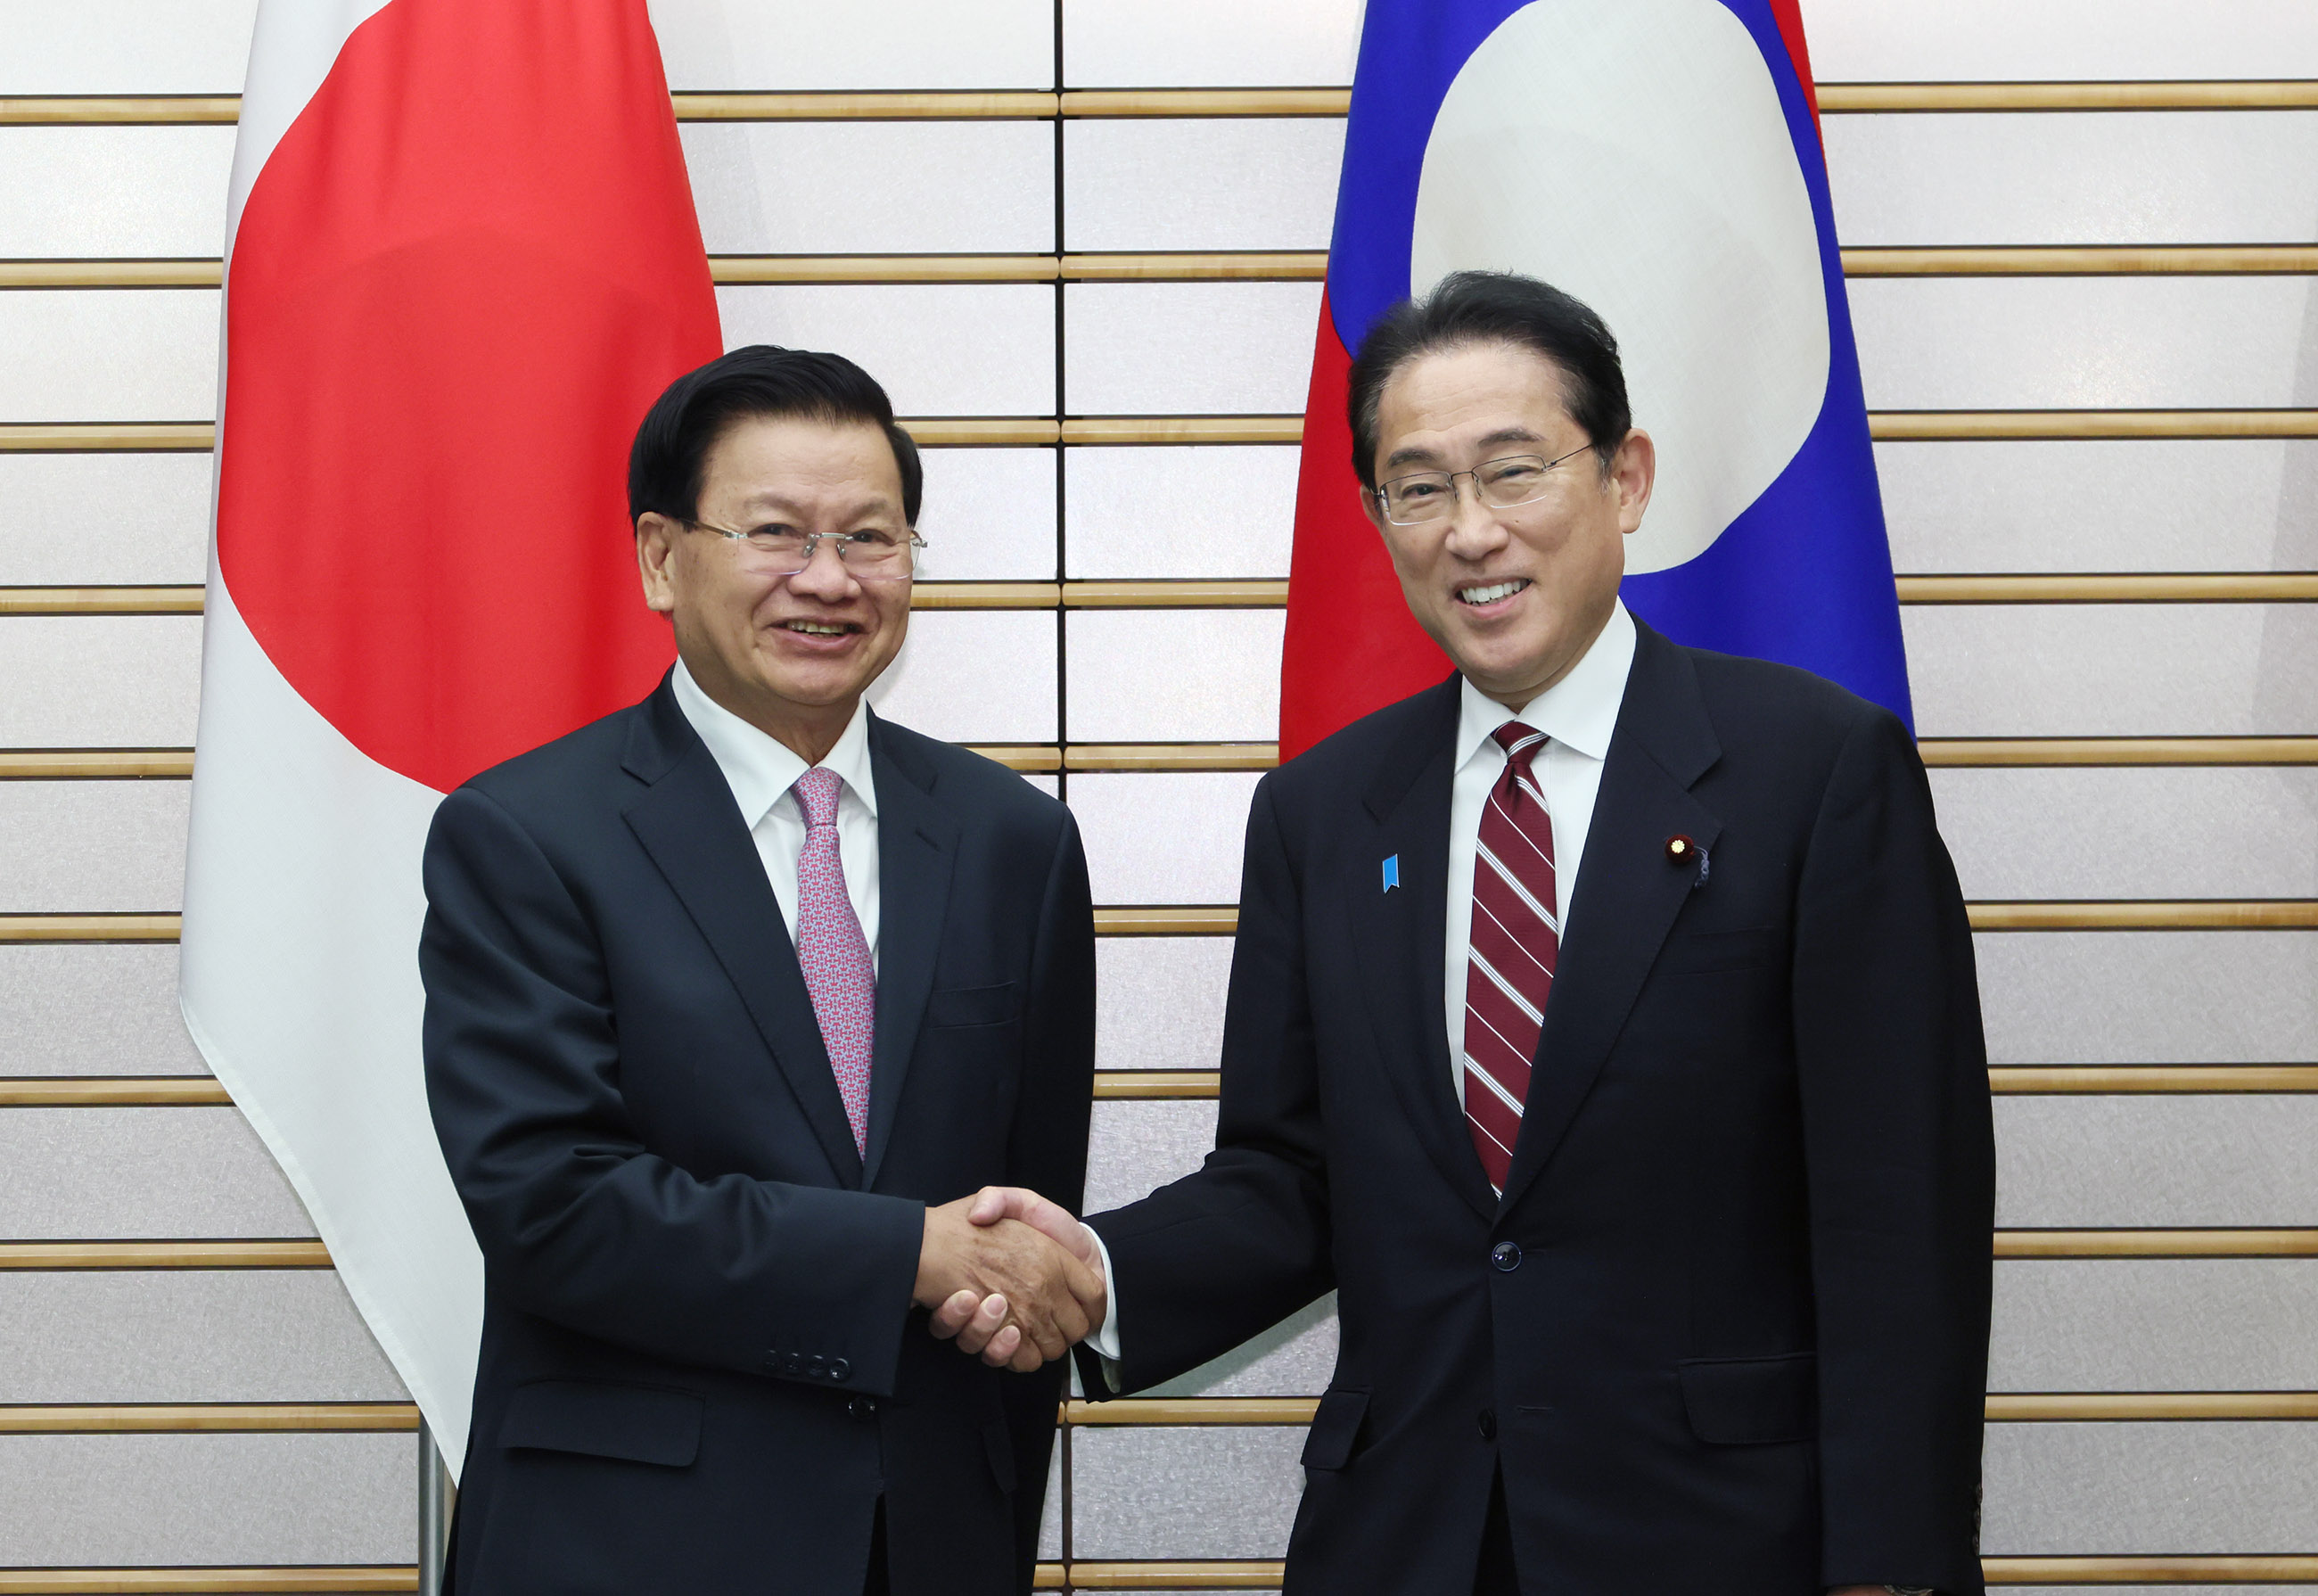 Japan-Laos Summit Meeting